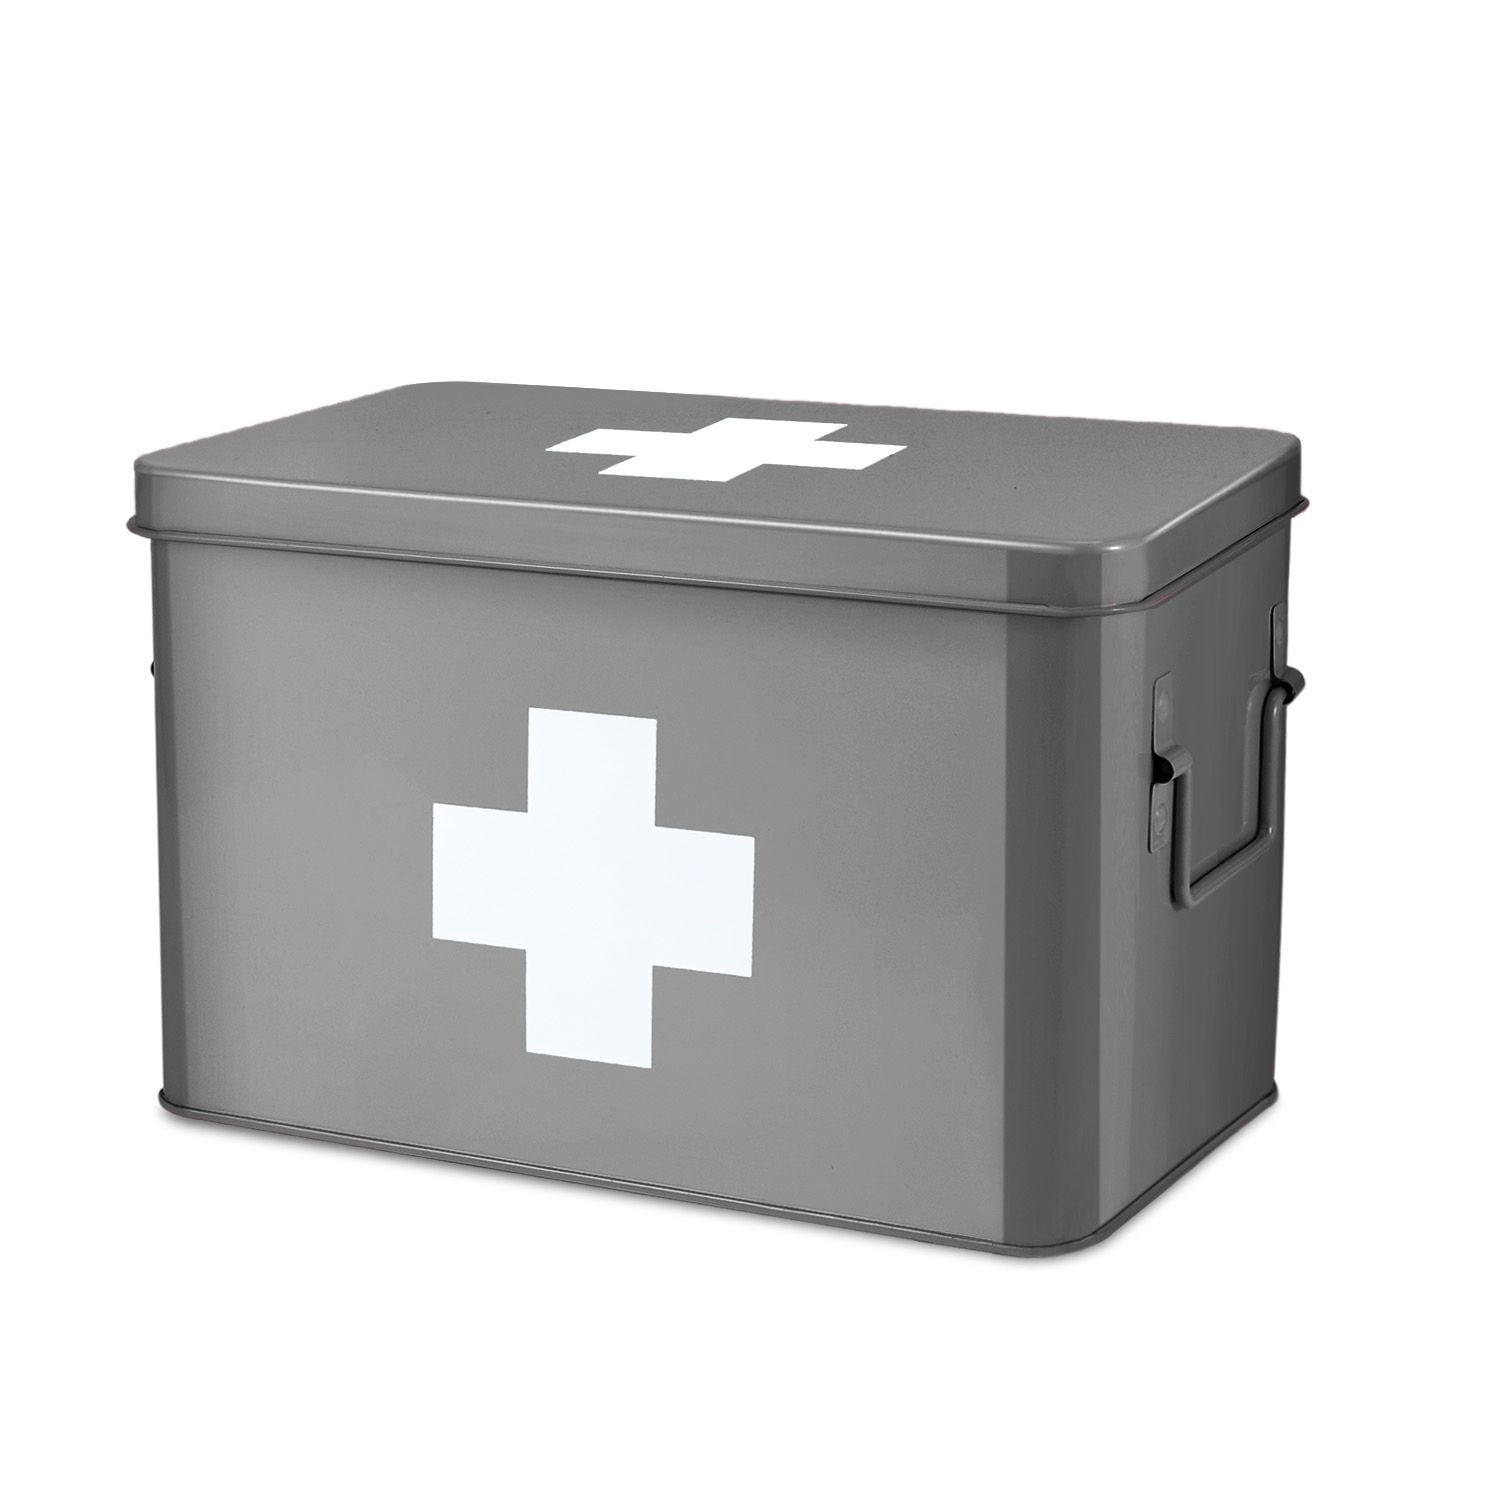  Toyvian First Aid Medicine Cabinet Box Portable